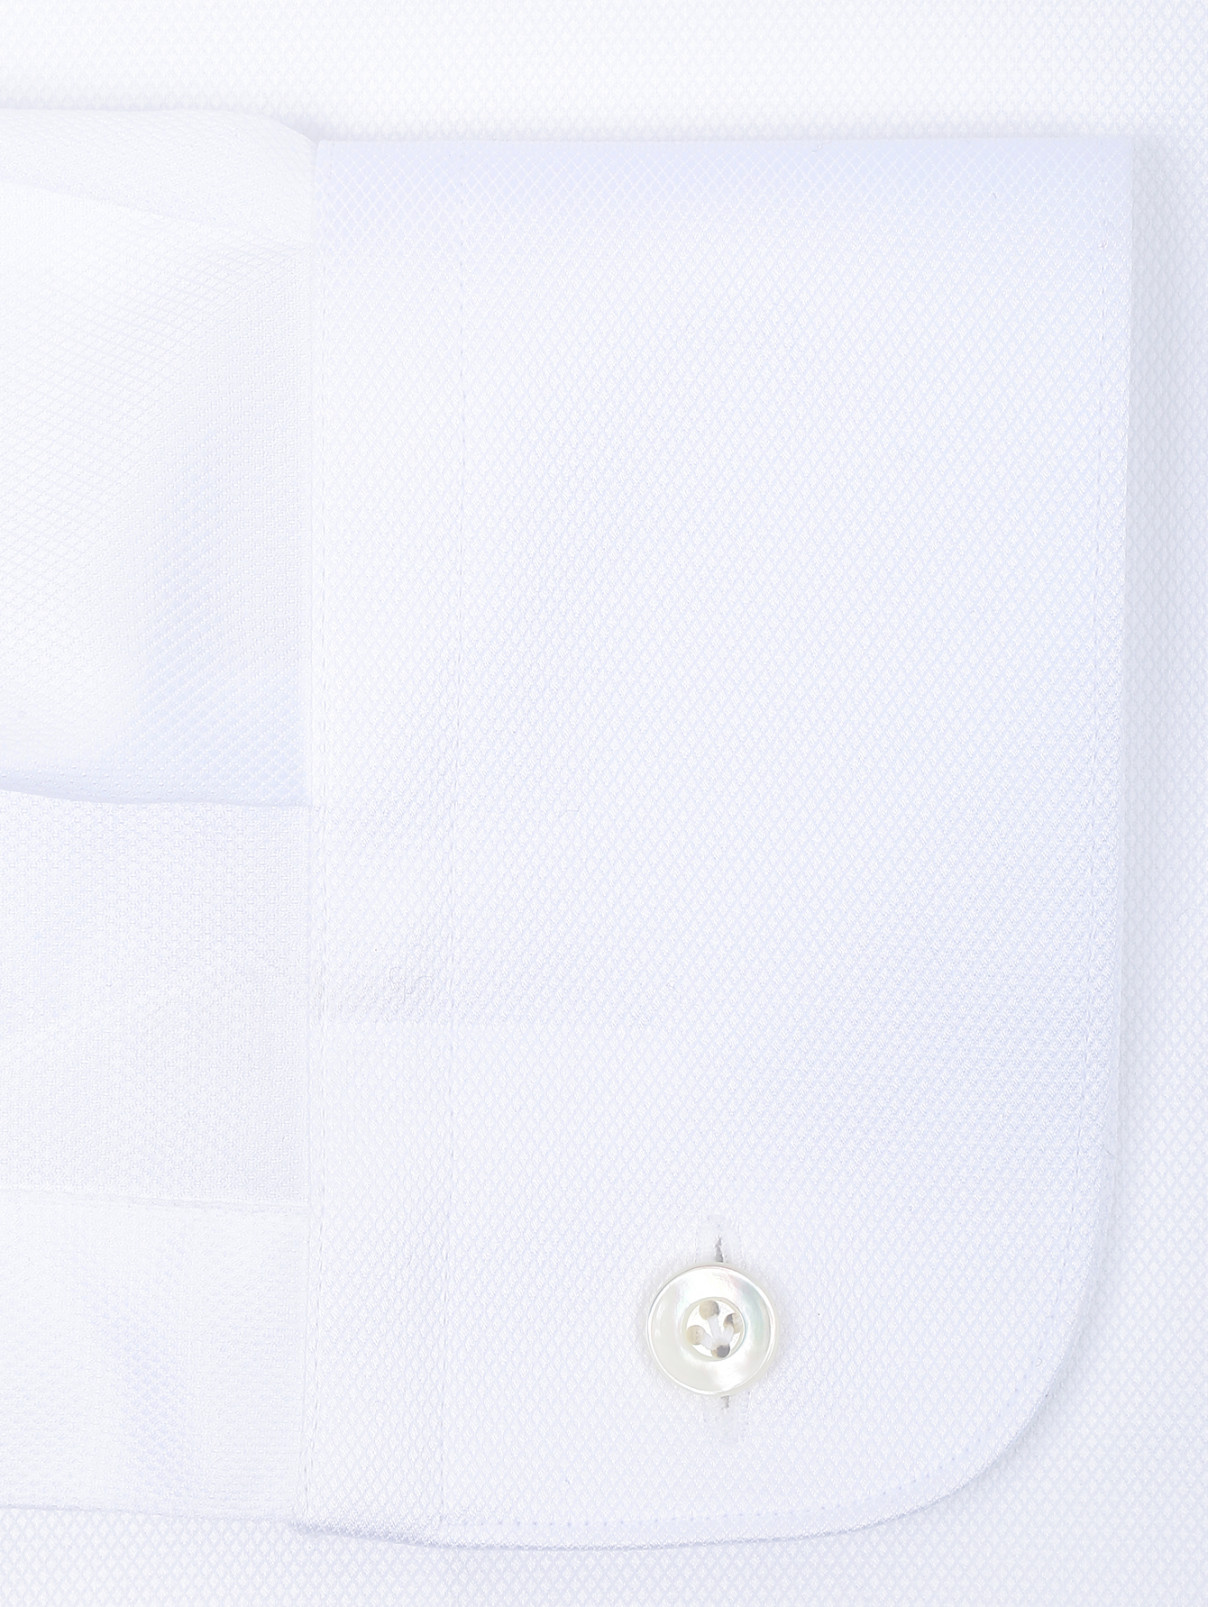 Рубашка из хлопка Andrew Duck  –  Деталь1  – Цвет:  Белый